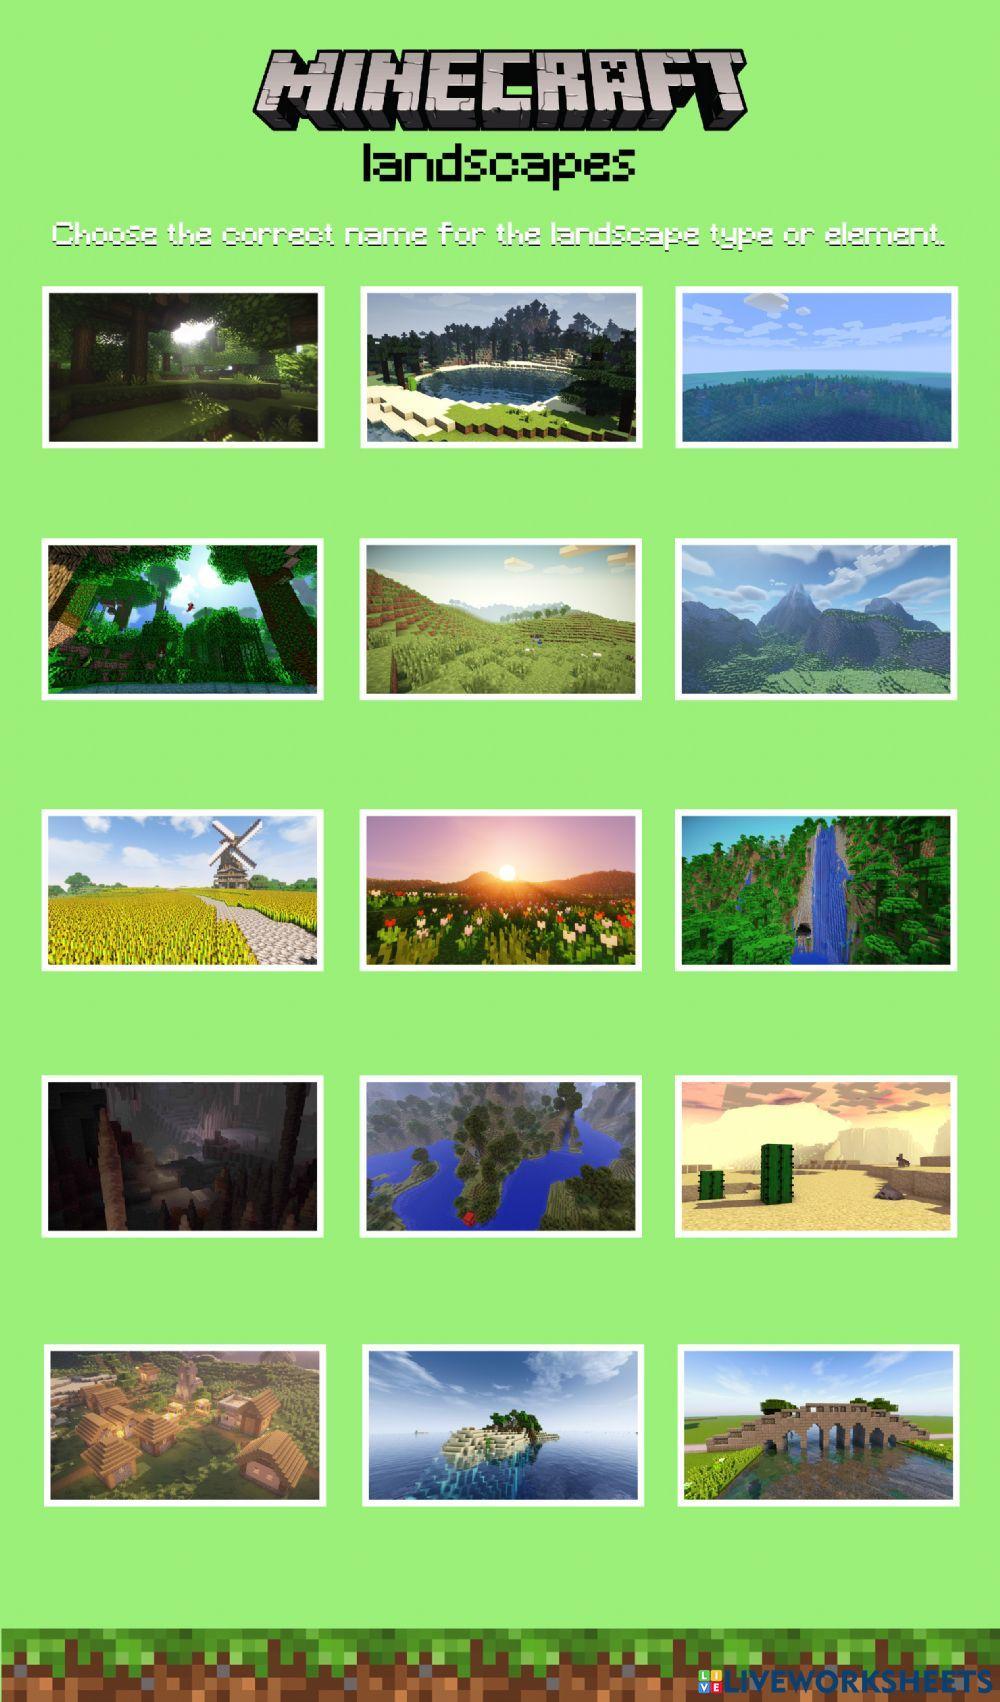 Minecraft: landscapes